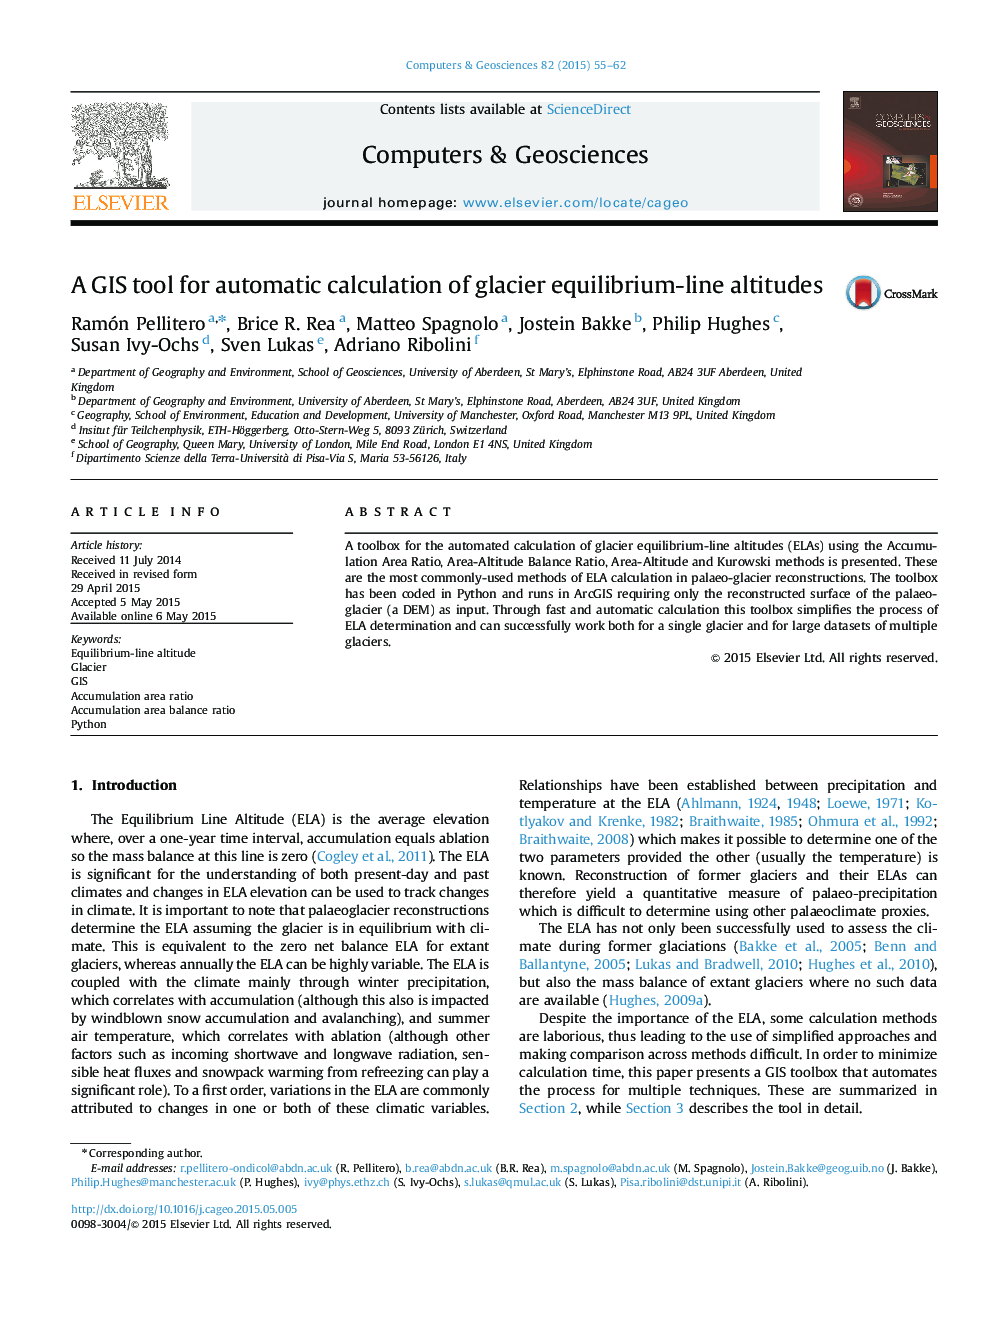 A GIS tool for automatic calculation of glacier equilibrium-line altitudes